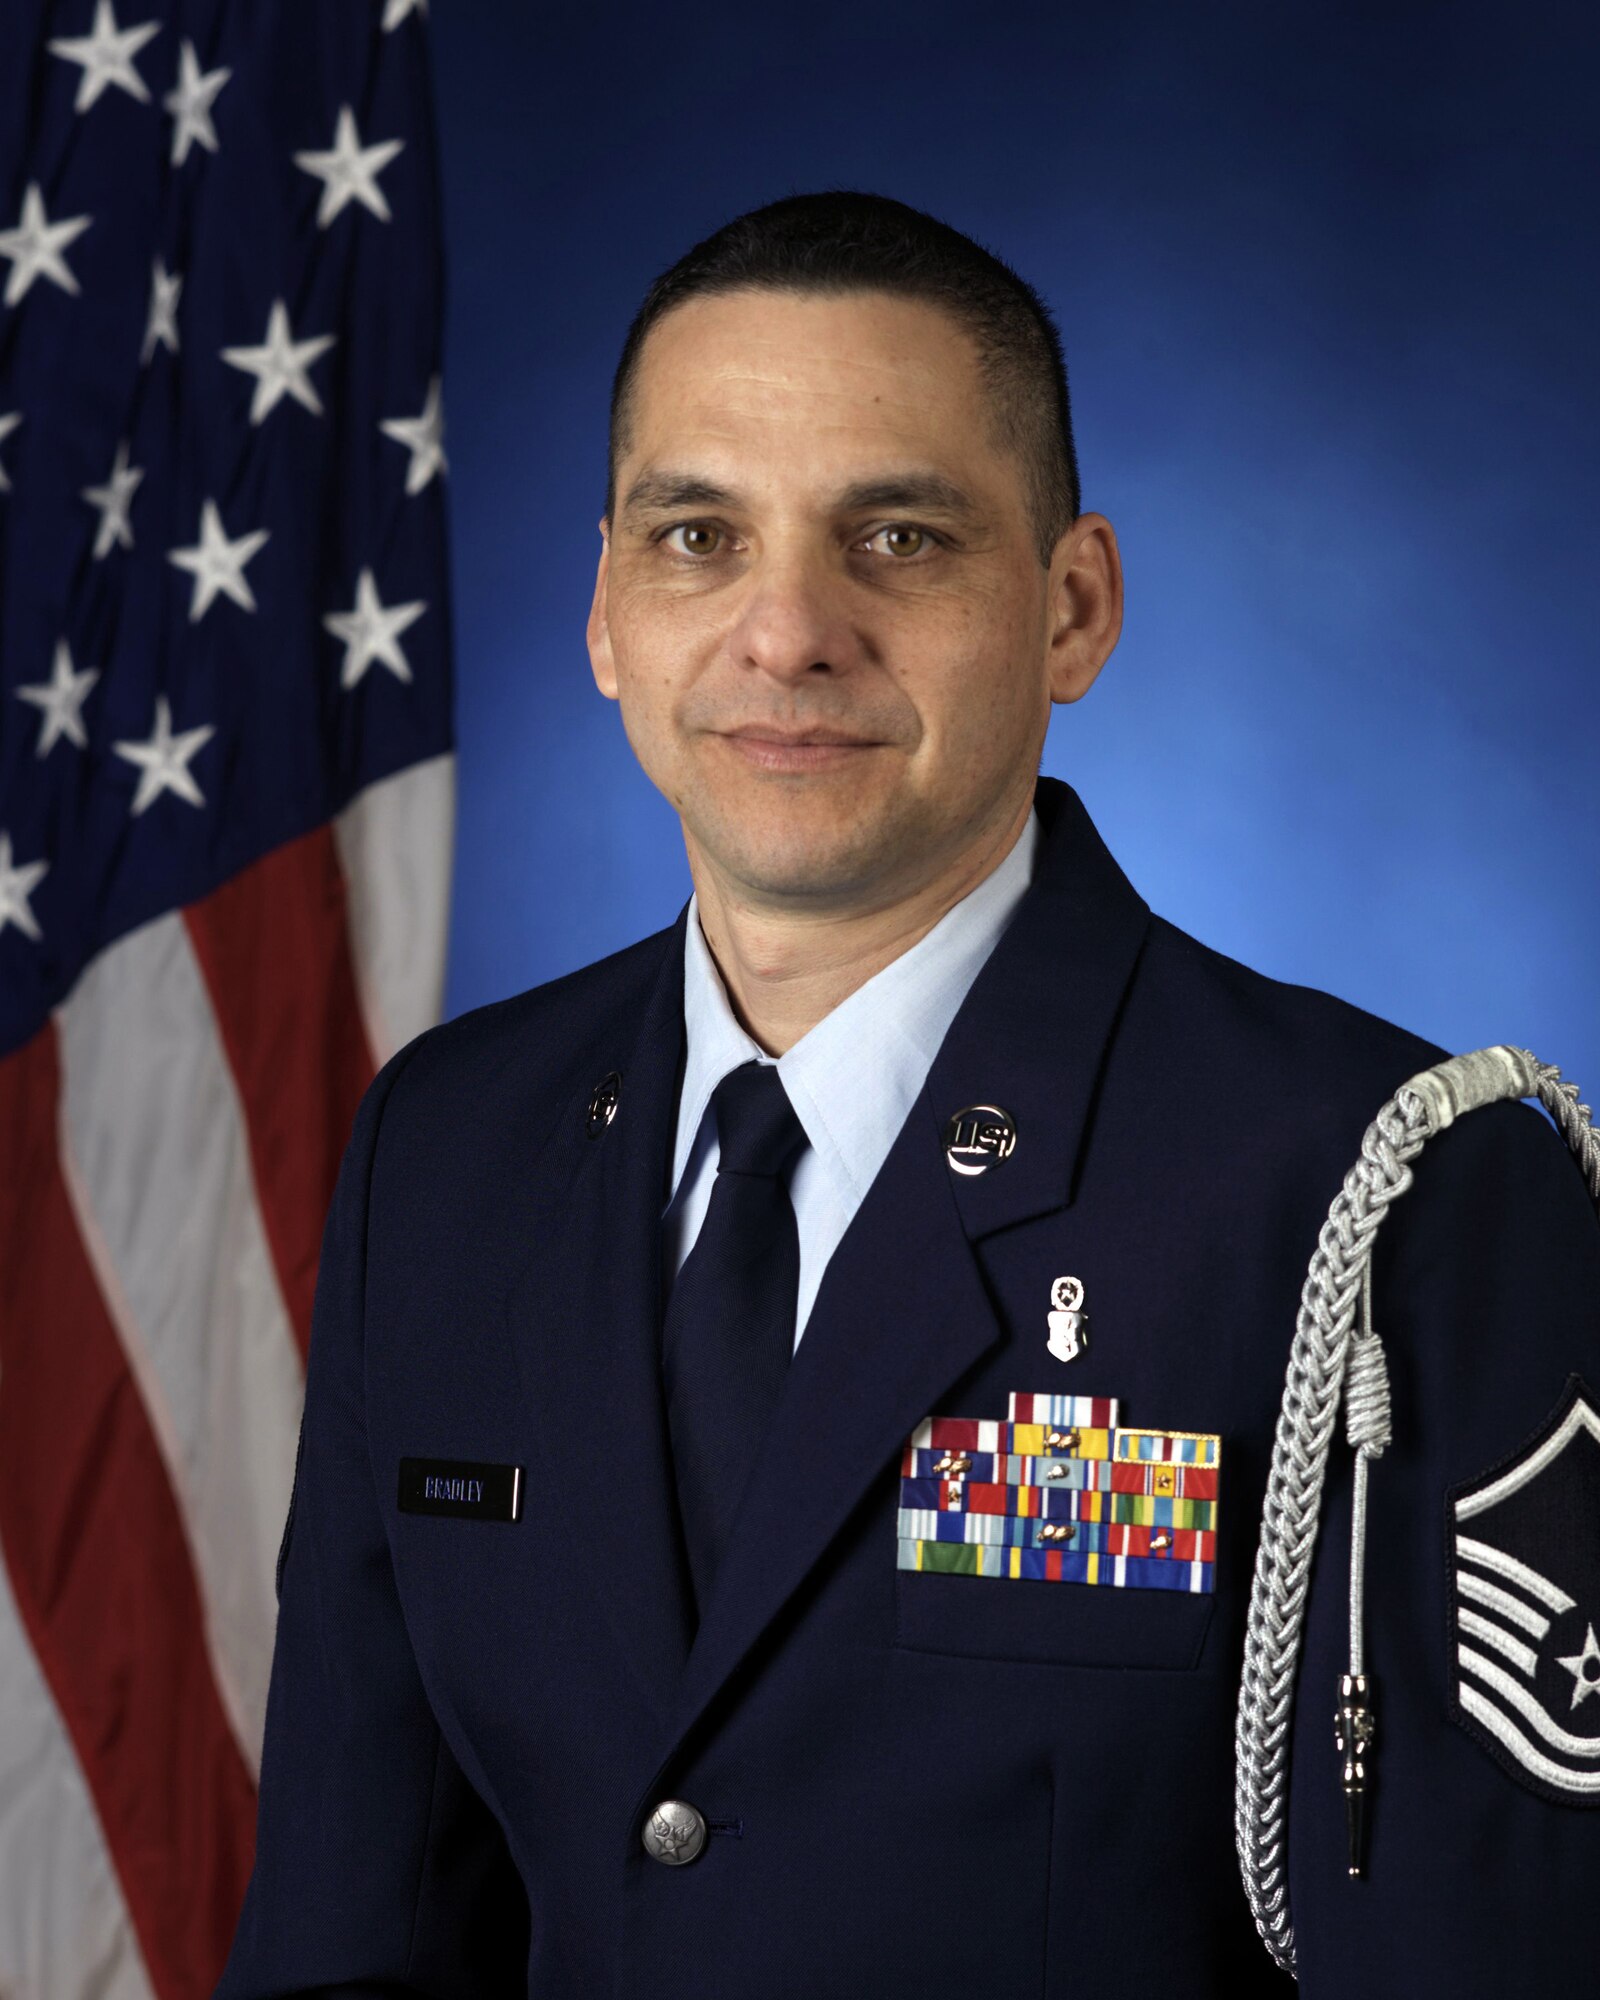 Official U.S. Air Force photo of Master Sgt. Emile Bradley enlisted aide to Lt. Gen. Dana T. Atkins, 11th Air Force commander, Joint Base Elmendorf-Richardson.